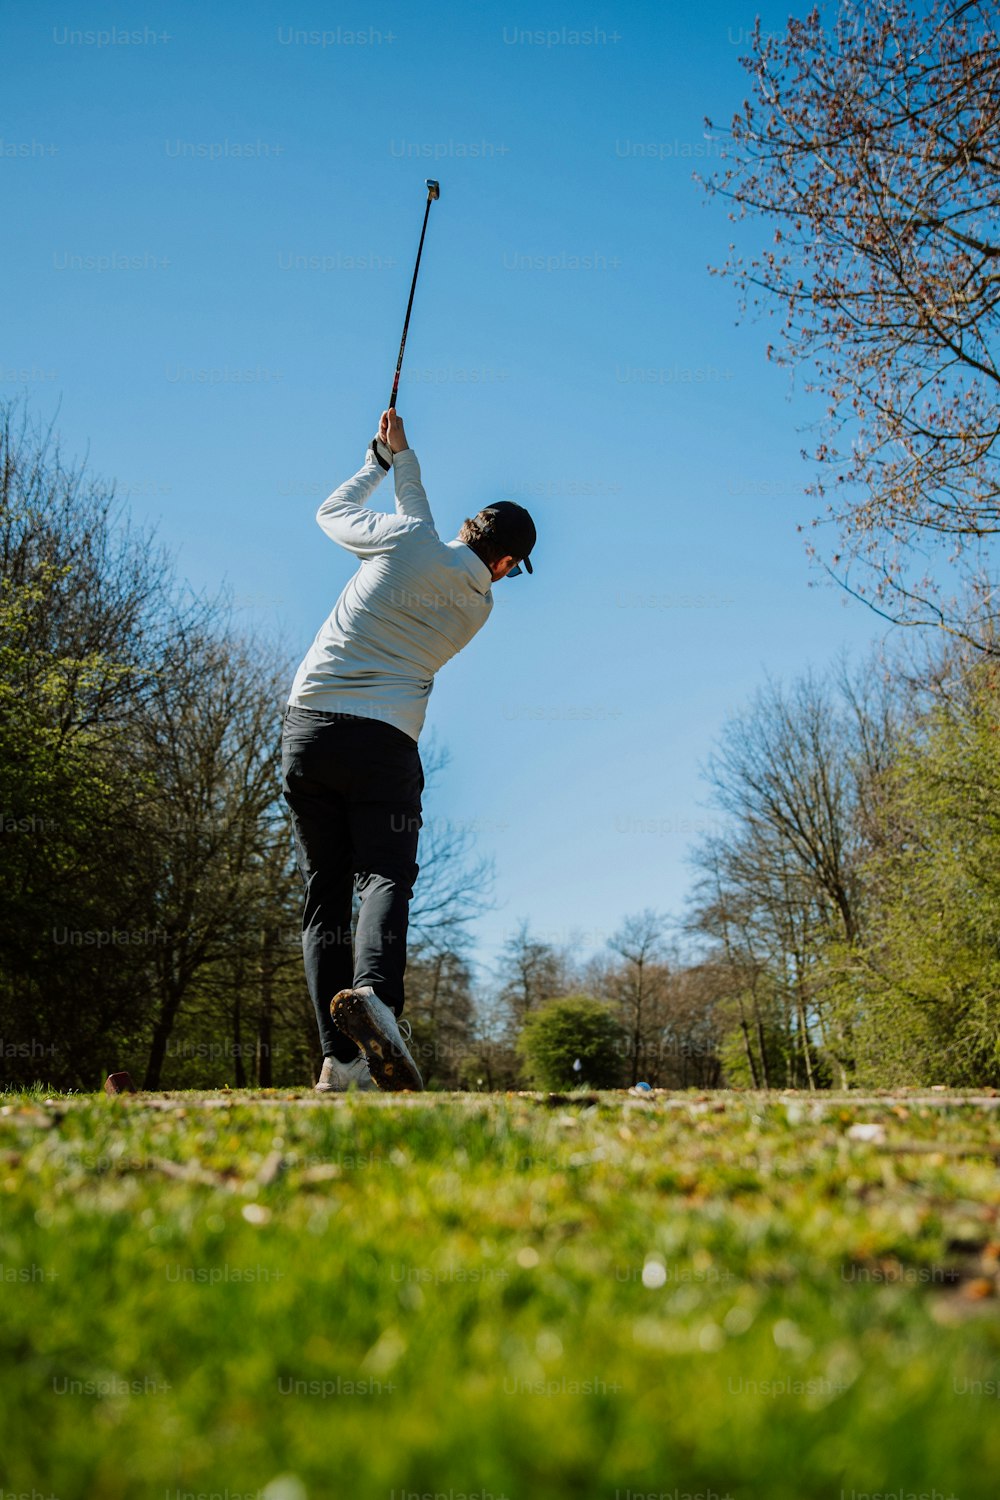 Un hombre balanceando un palo de golf en un parque